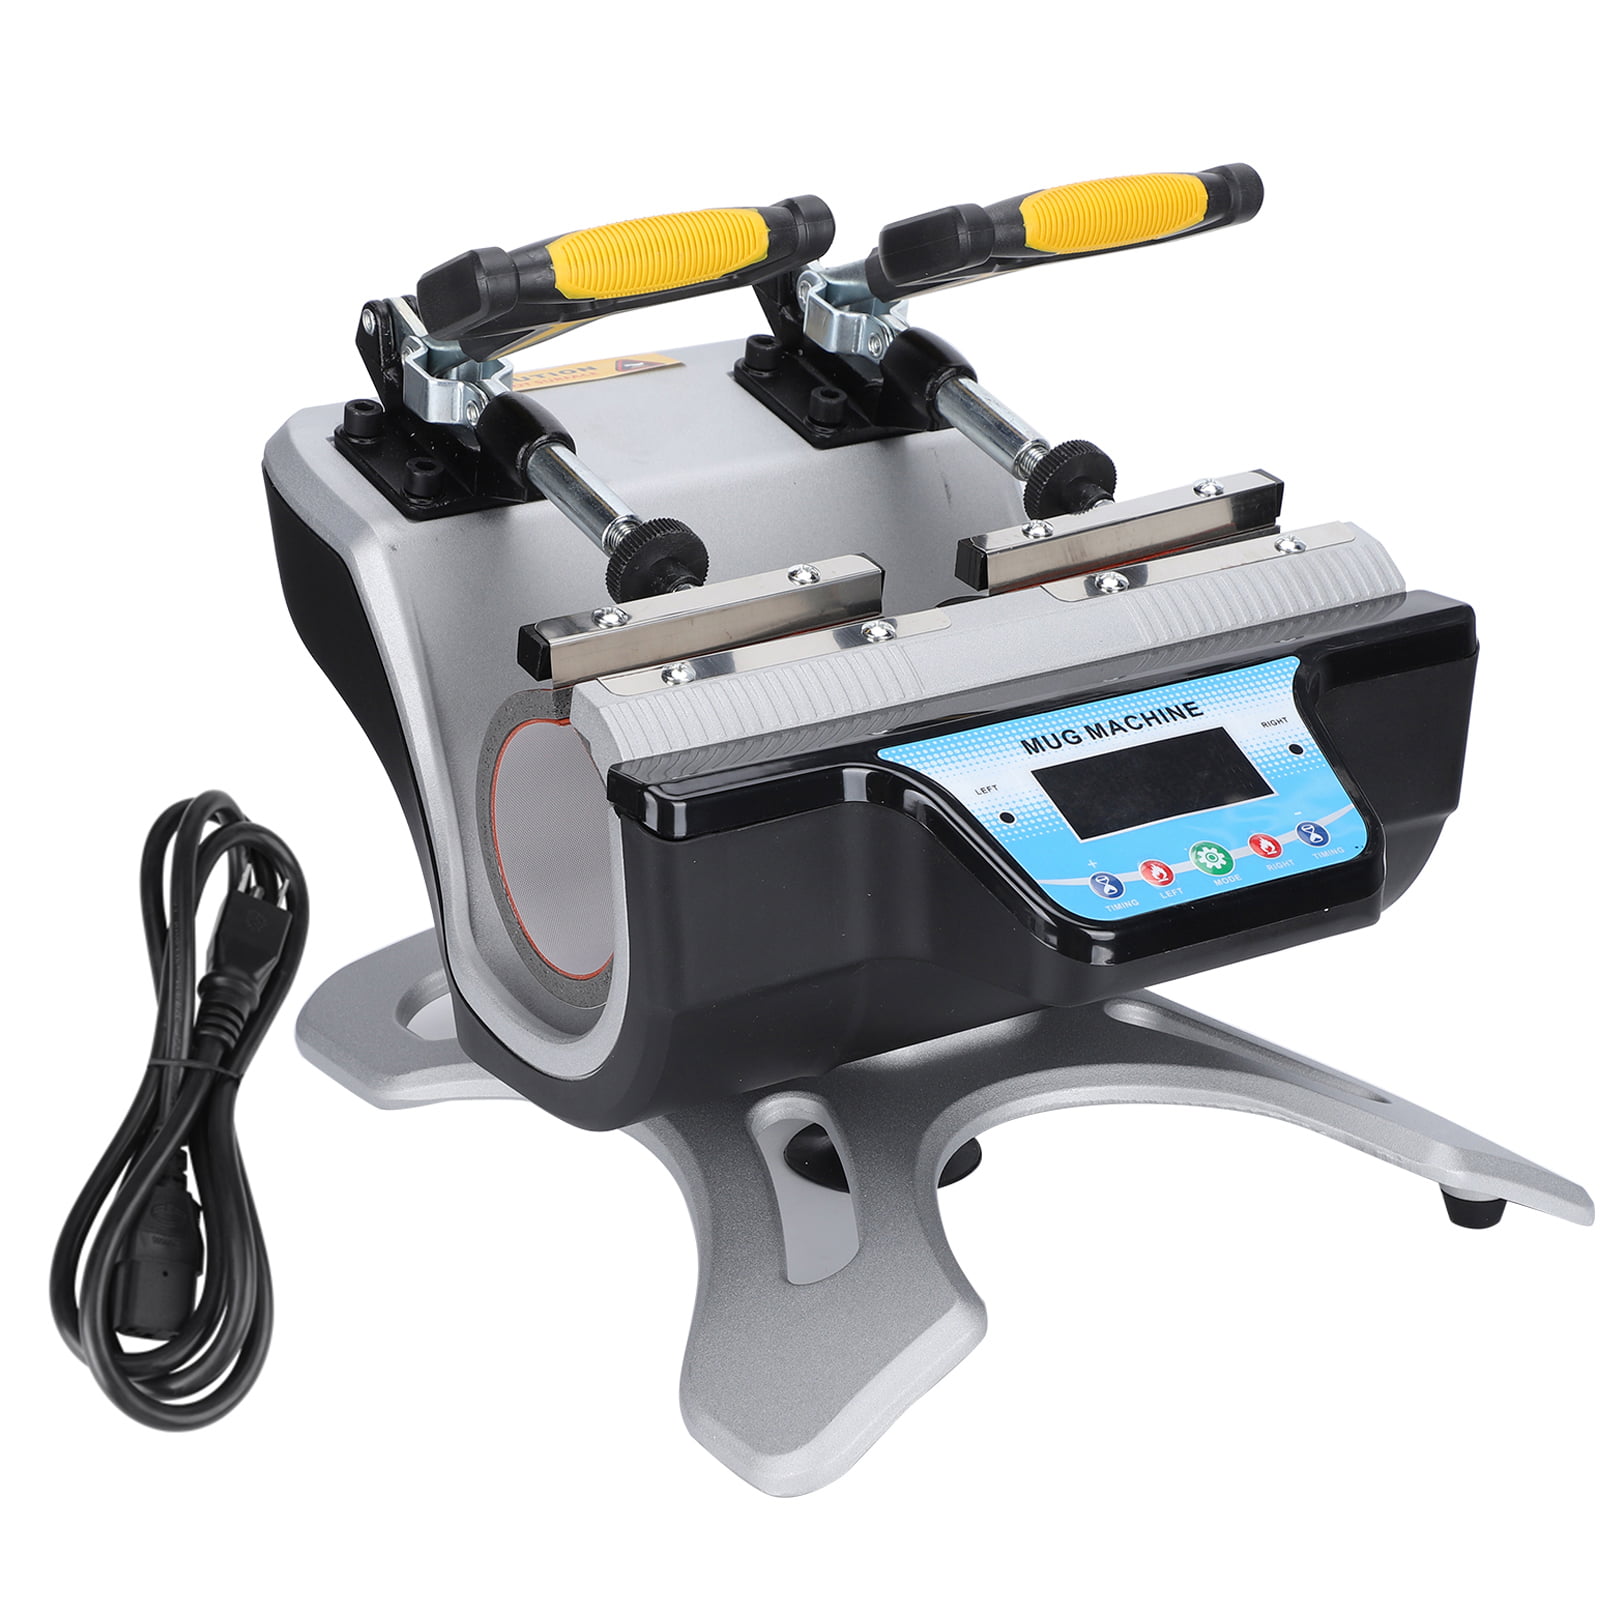 110V ST-210 Double Stations Mug Heat Press Sublimation Transfer Printing Machine 